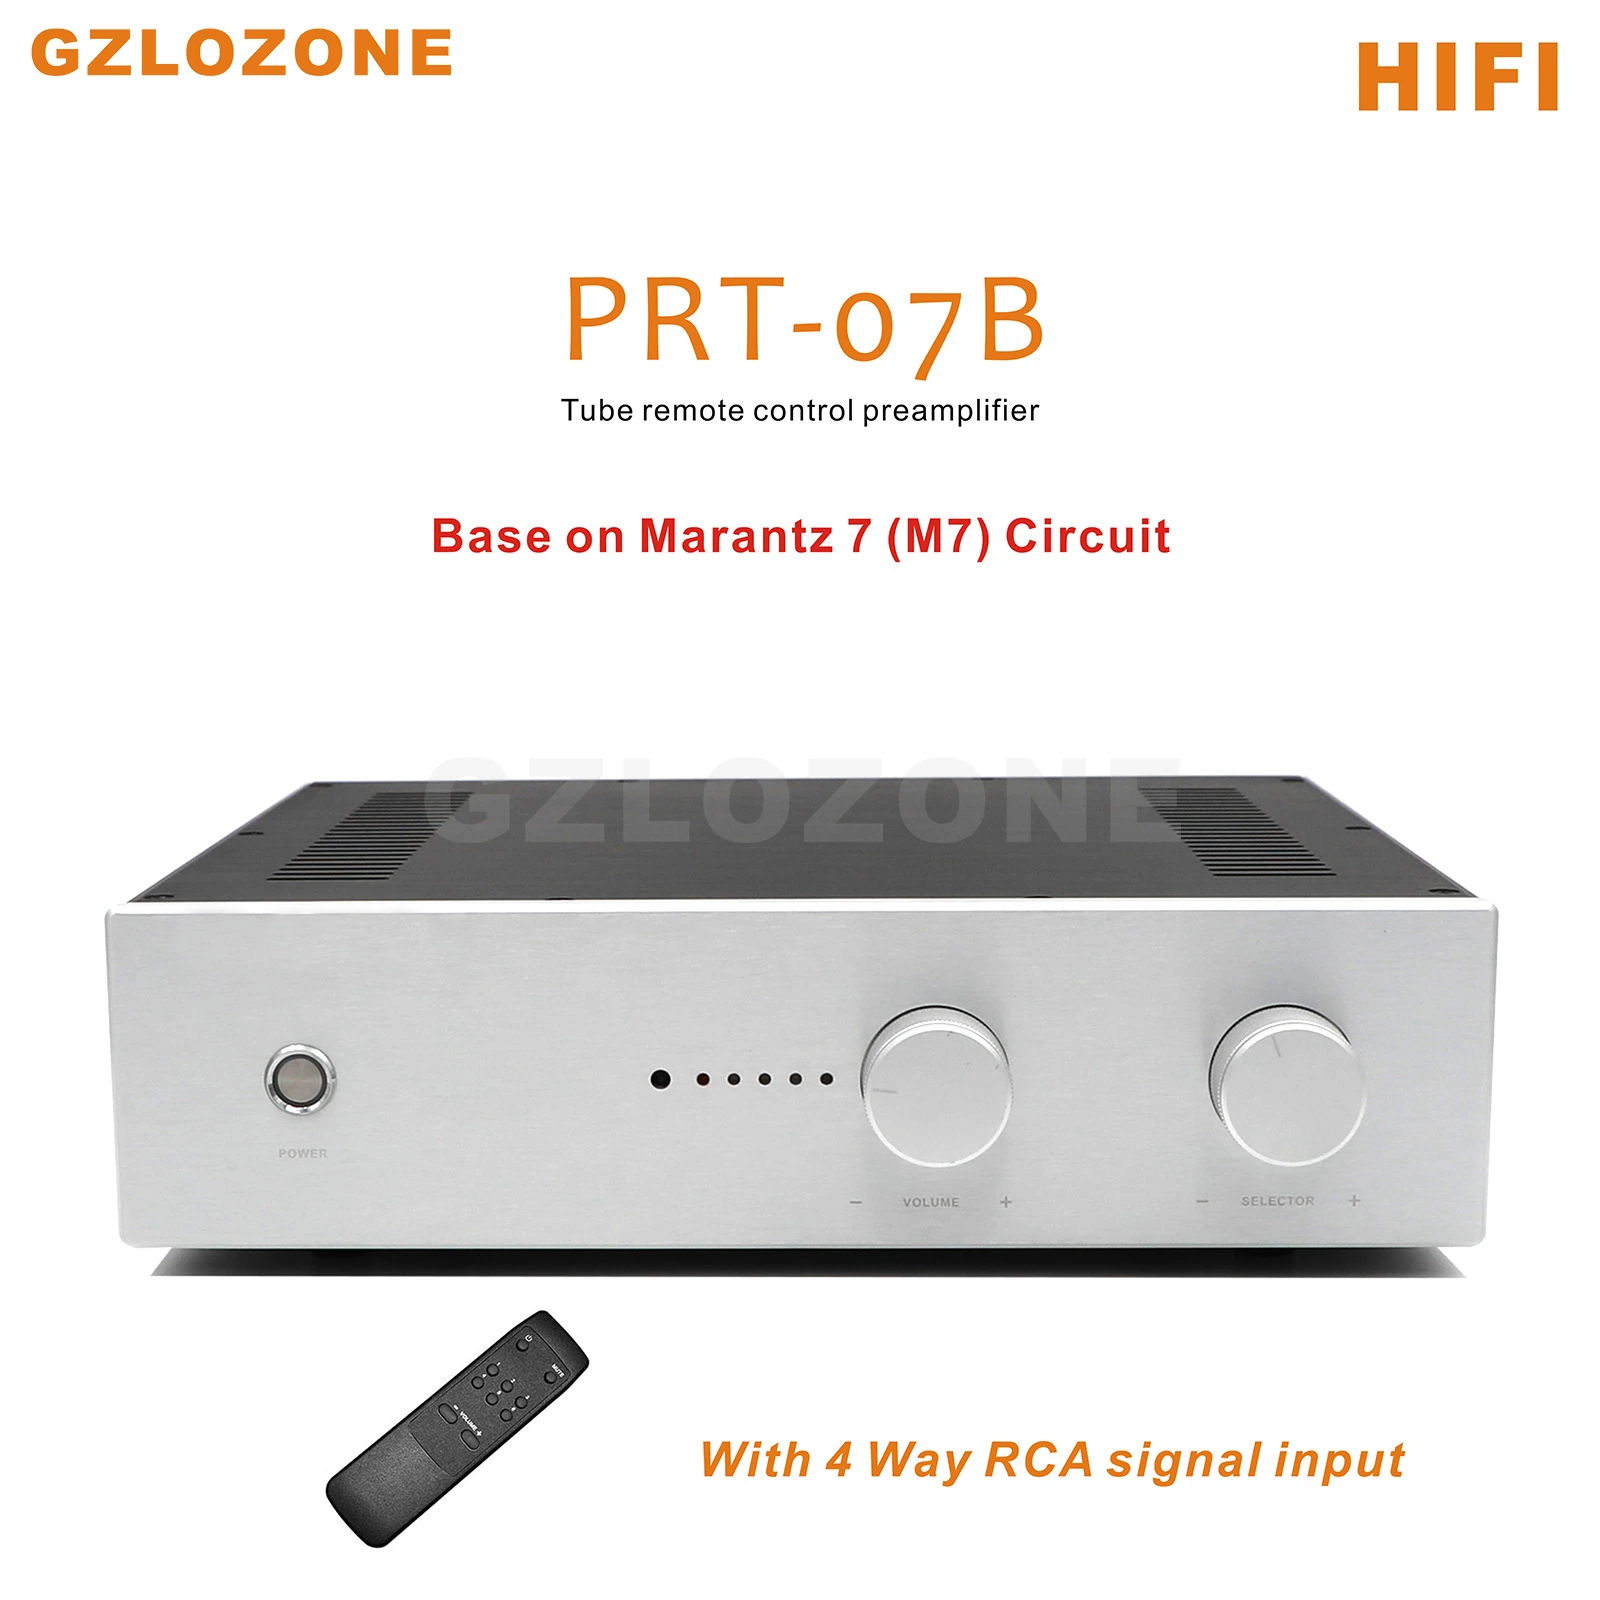 

HIFI PRT-07B Tube Remote Control Preamplifier With 4 Way RCA Signal Input Base On Marantz 7 (M7) Circuit